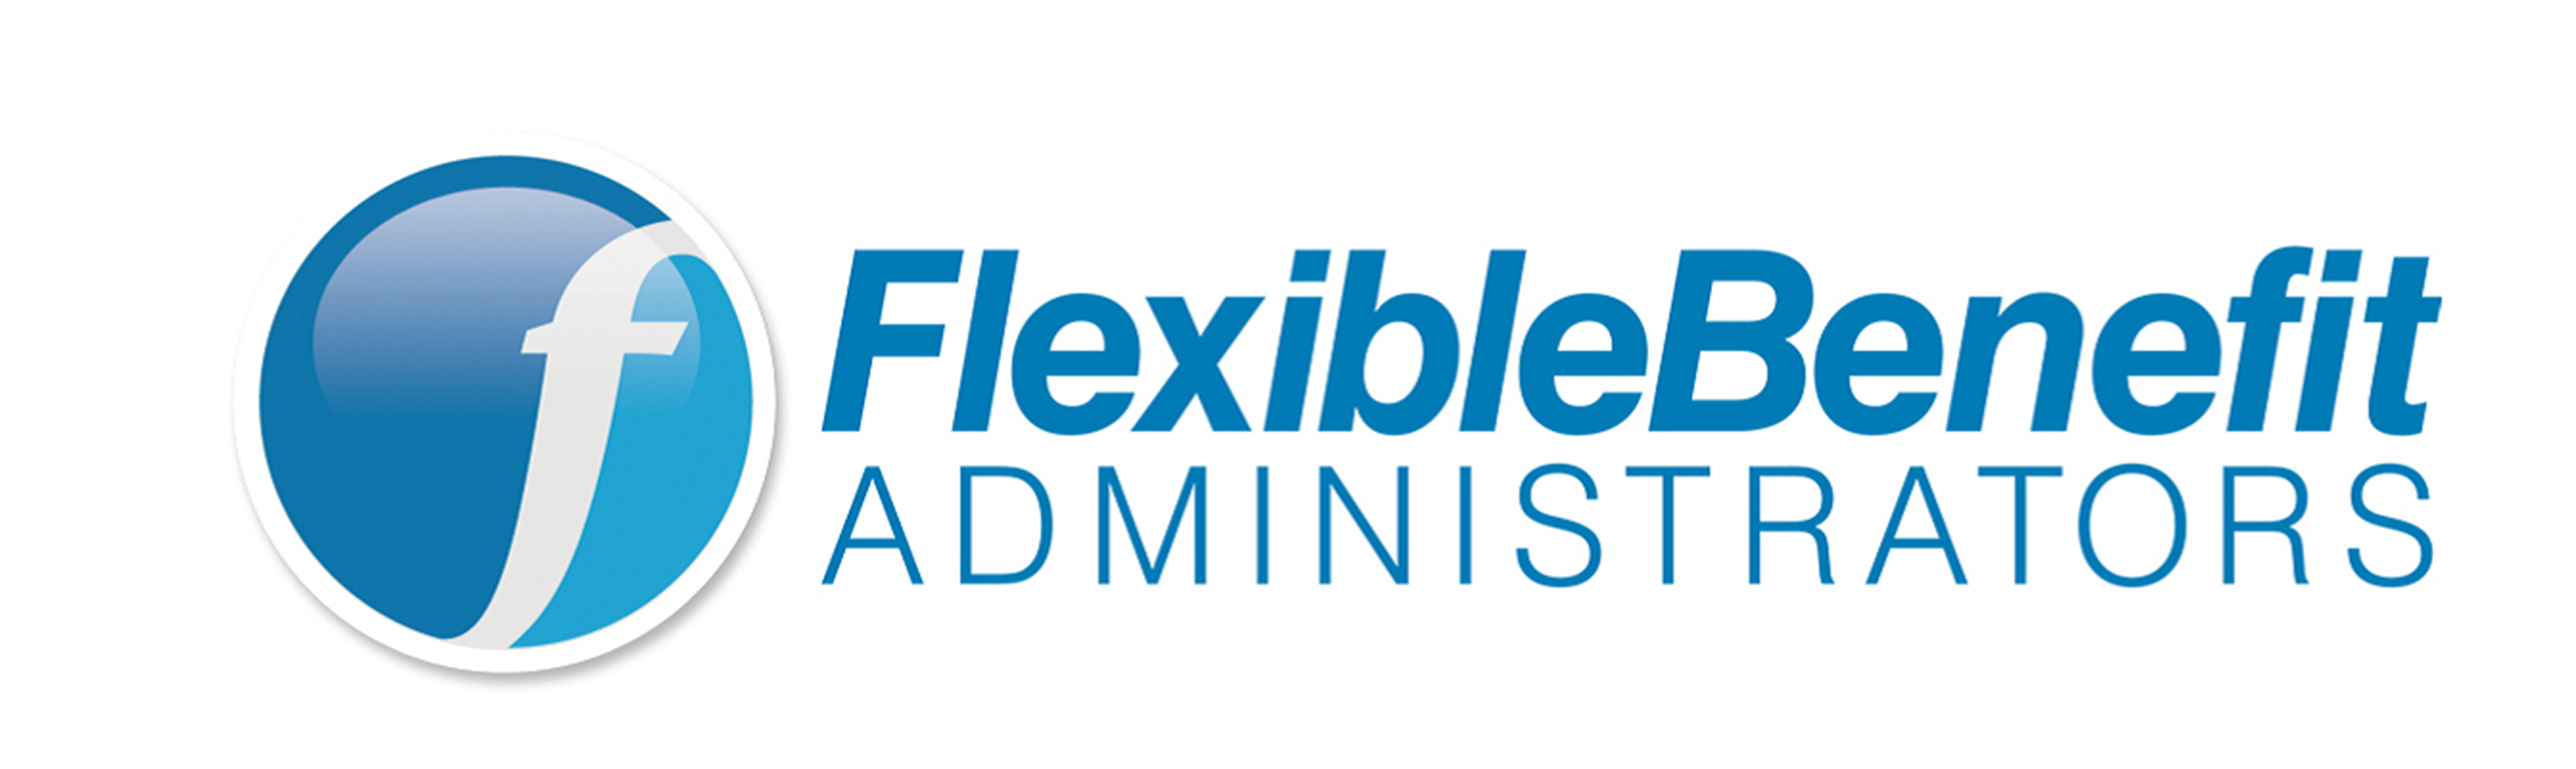 About Us | Flexible Benefit Administrators, Inc.